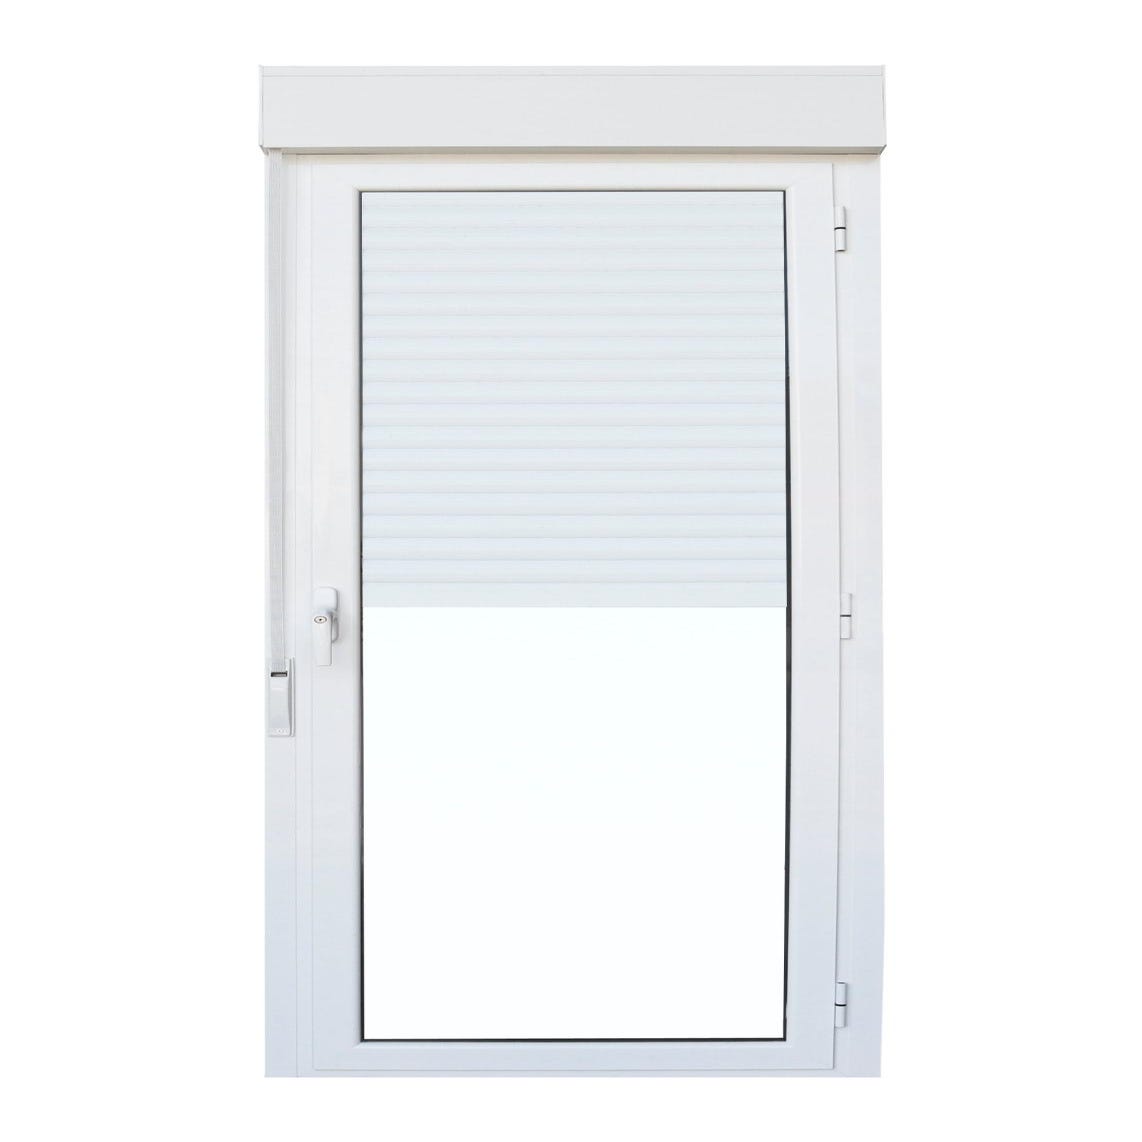 Balconera PVC ARTENS blanca oscilobatiente con persiana de 120x229 cm